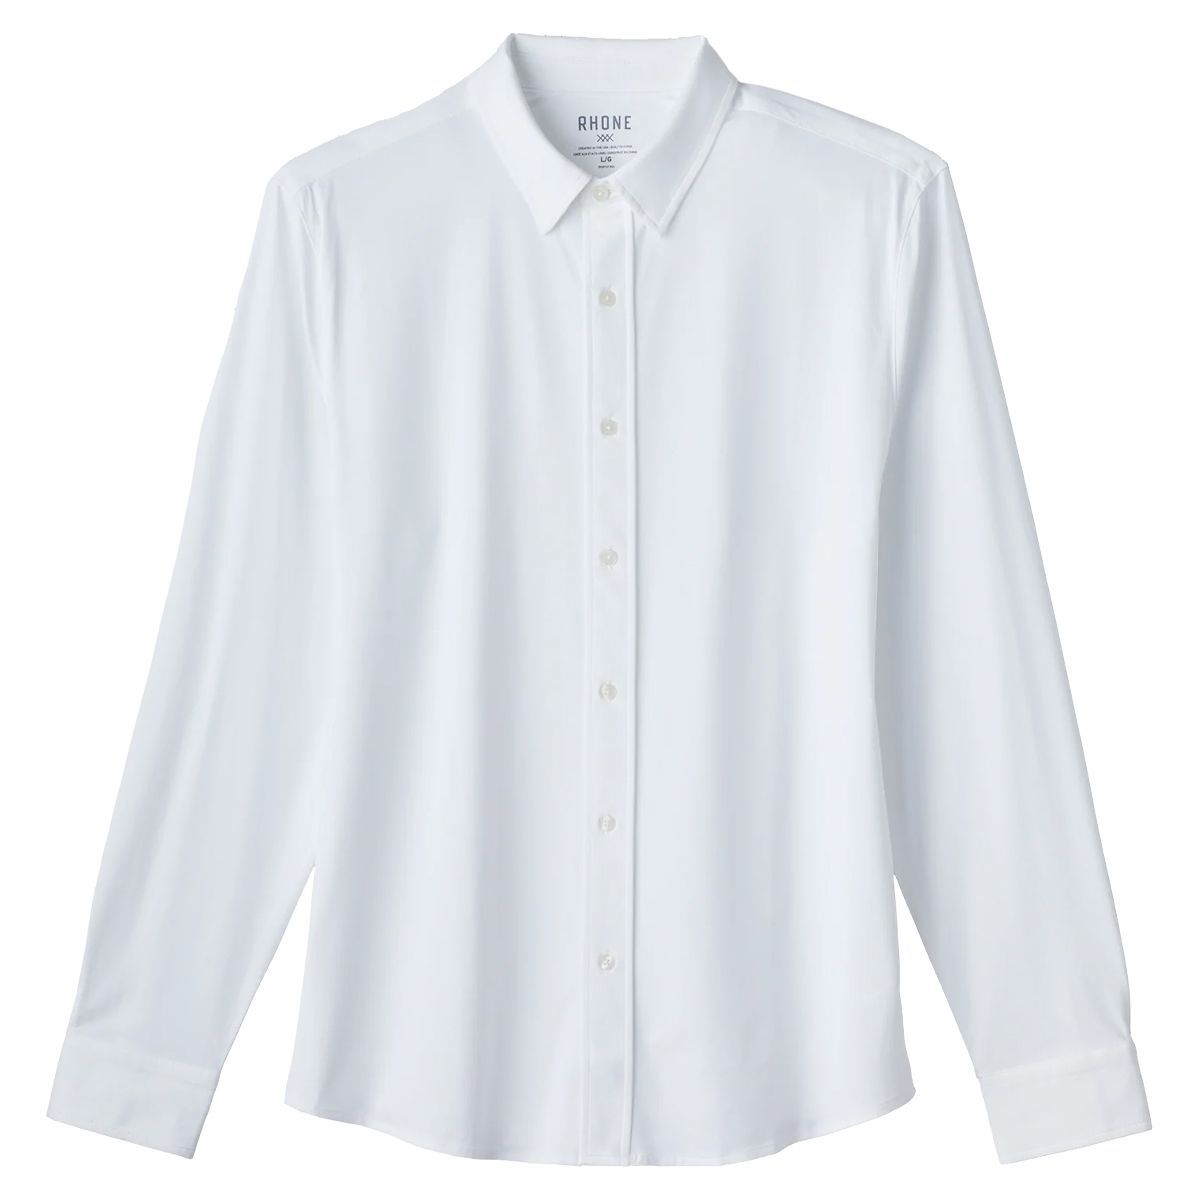 white dress shirts for men